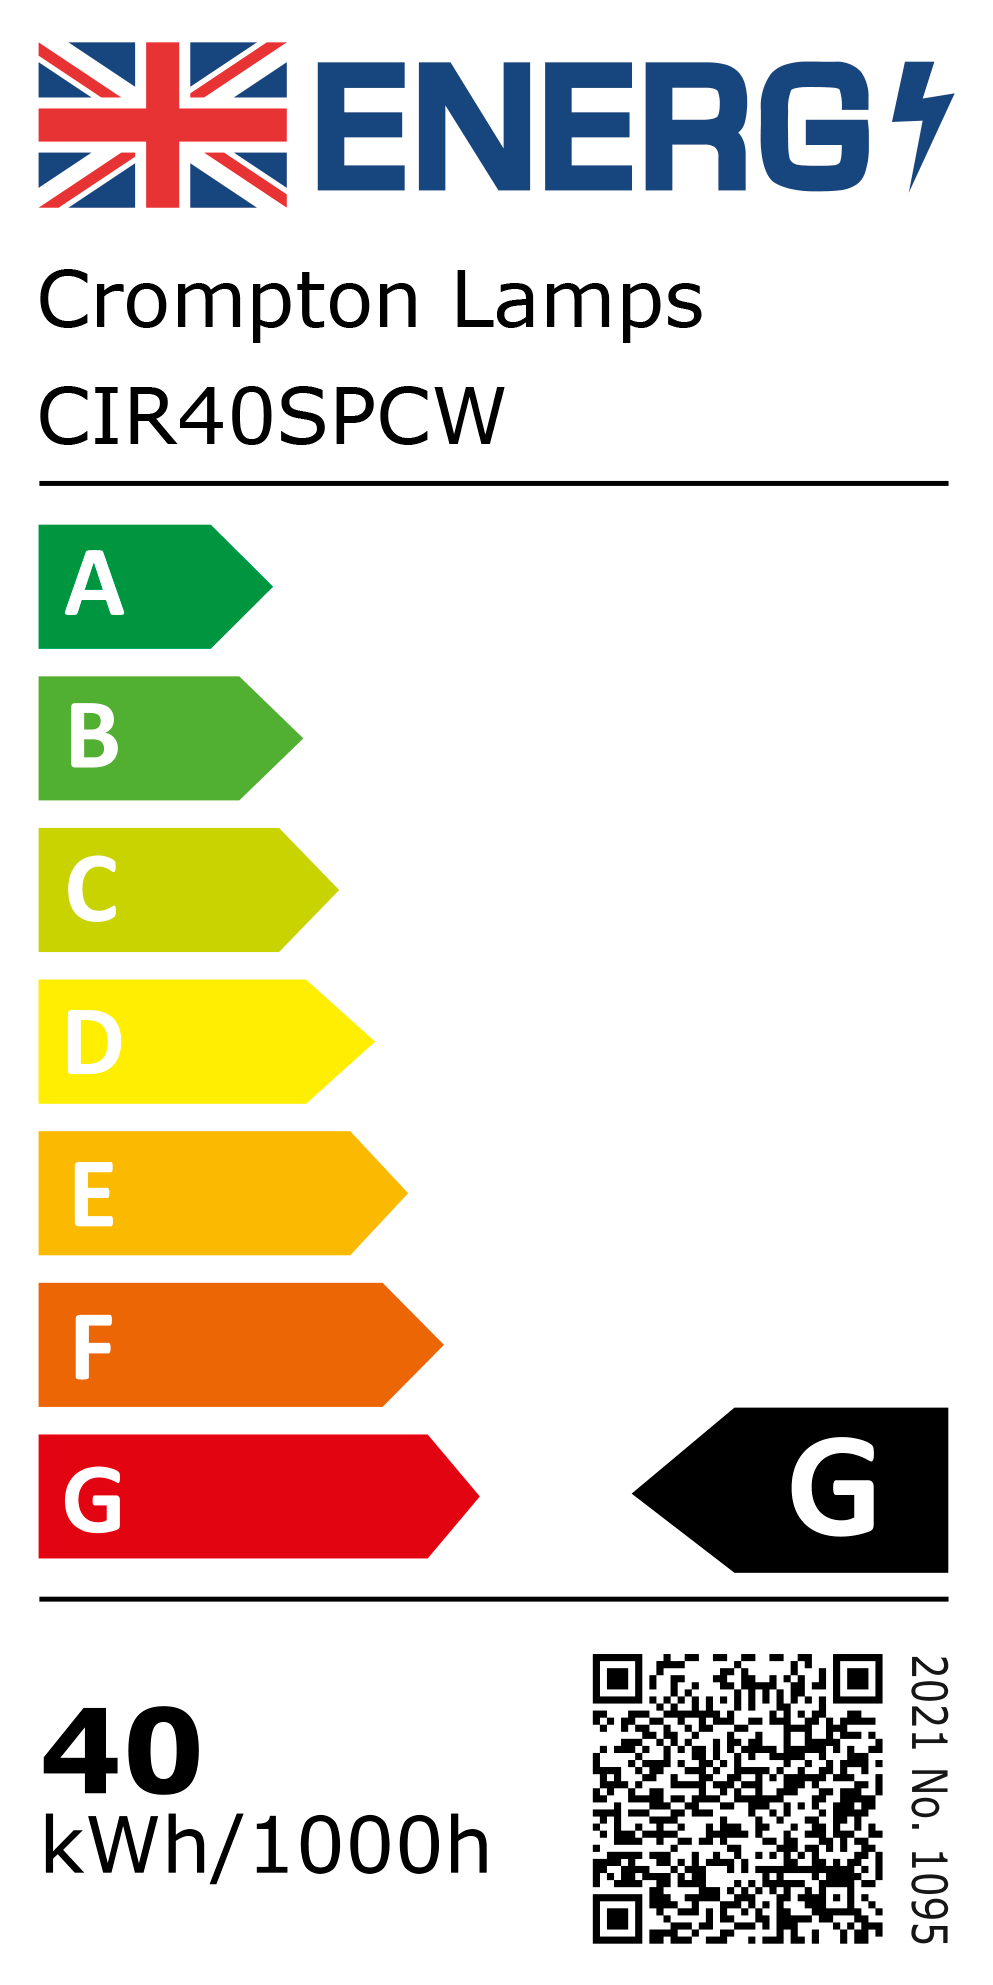 New 2021 Energy Rating Label: Stock Code CIR40SPCW